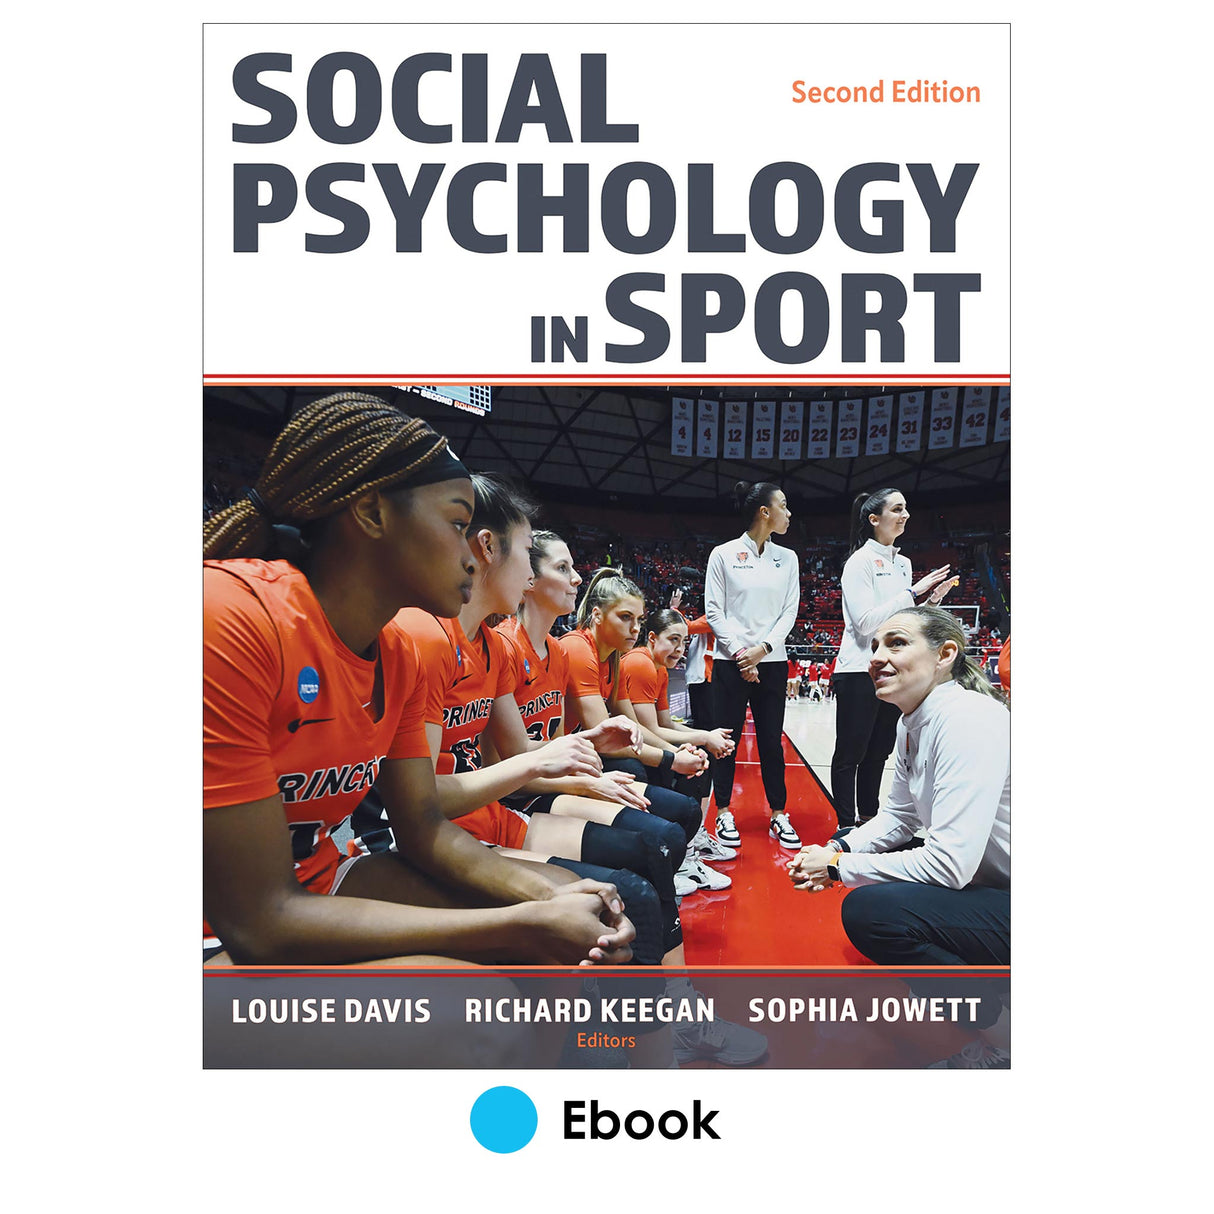 Social Psychology in Sport 2nd Edition epub